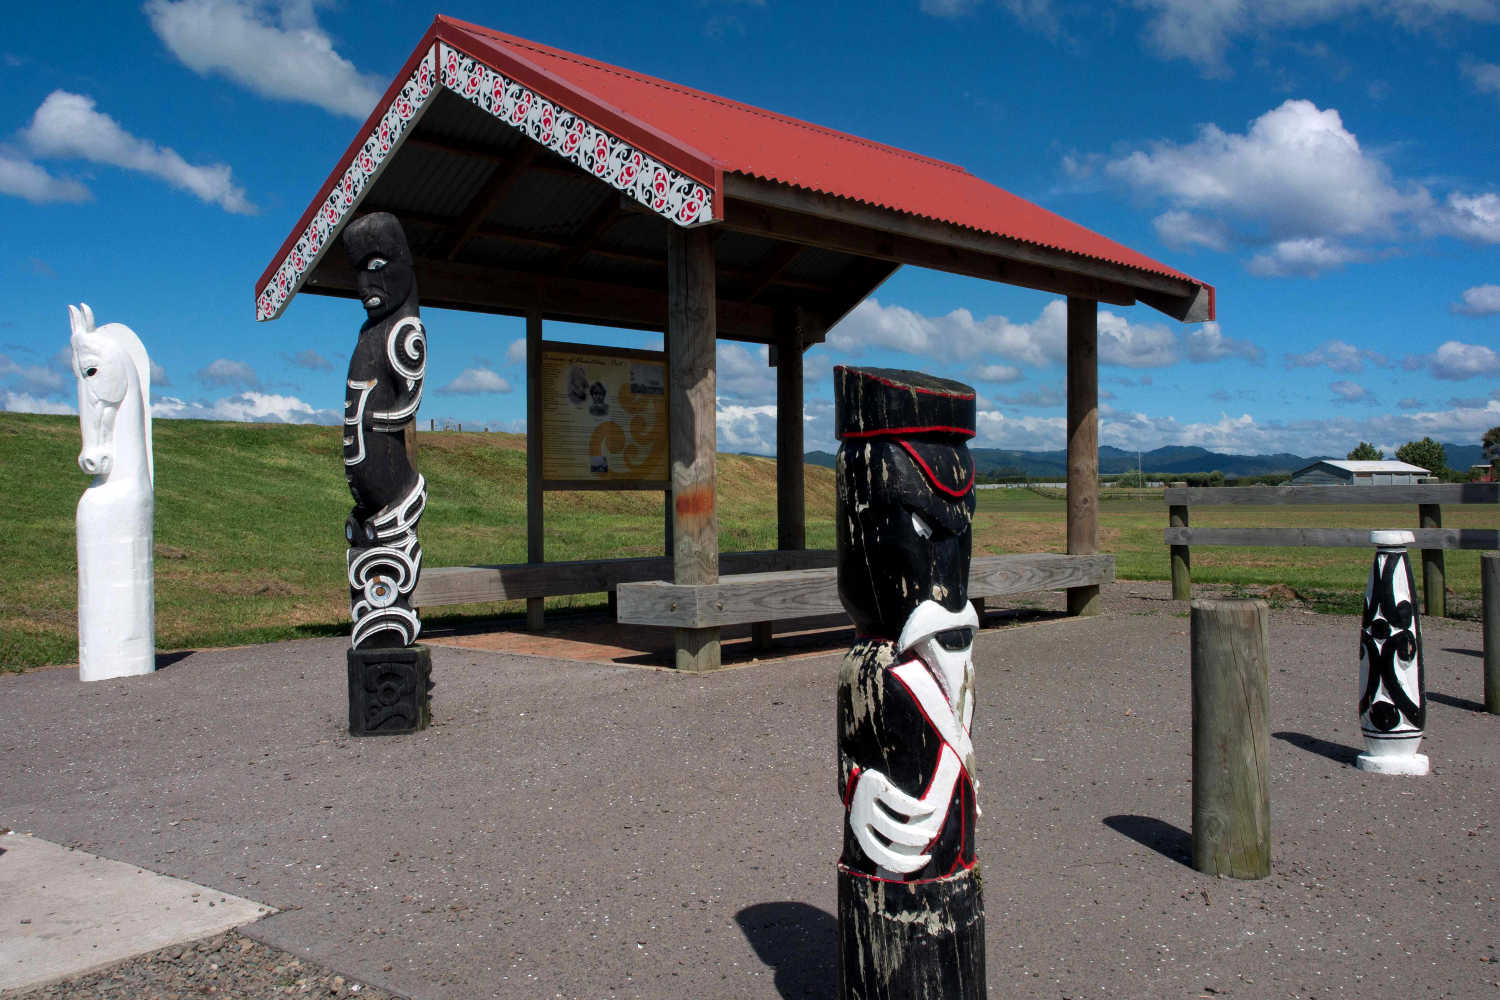 Memorial to 1865 invasion of Whakatohea of Maori land